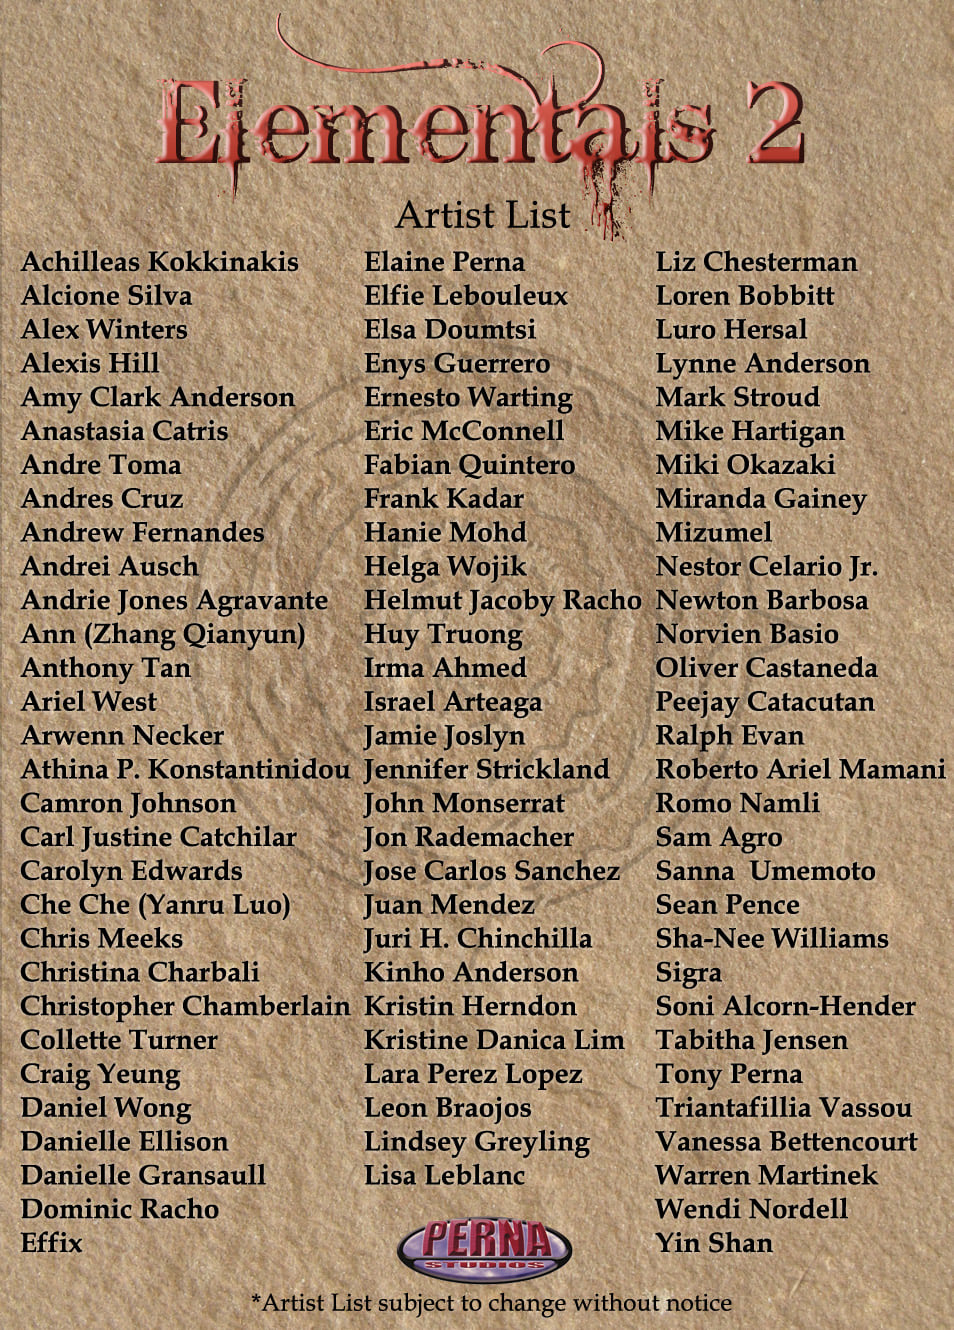 The Artist List for Elementals 2